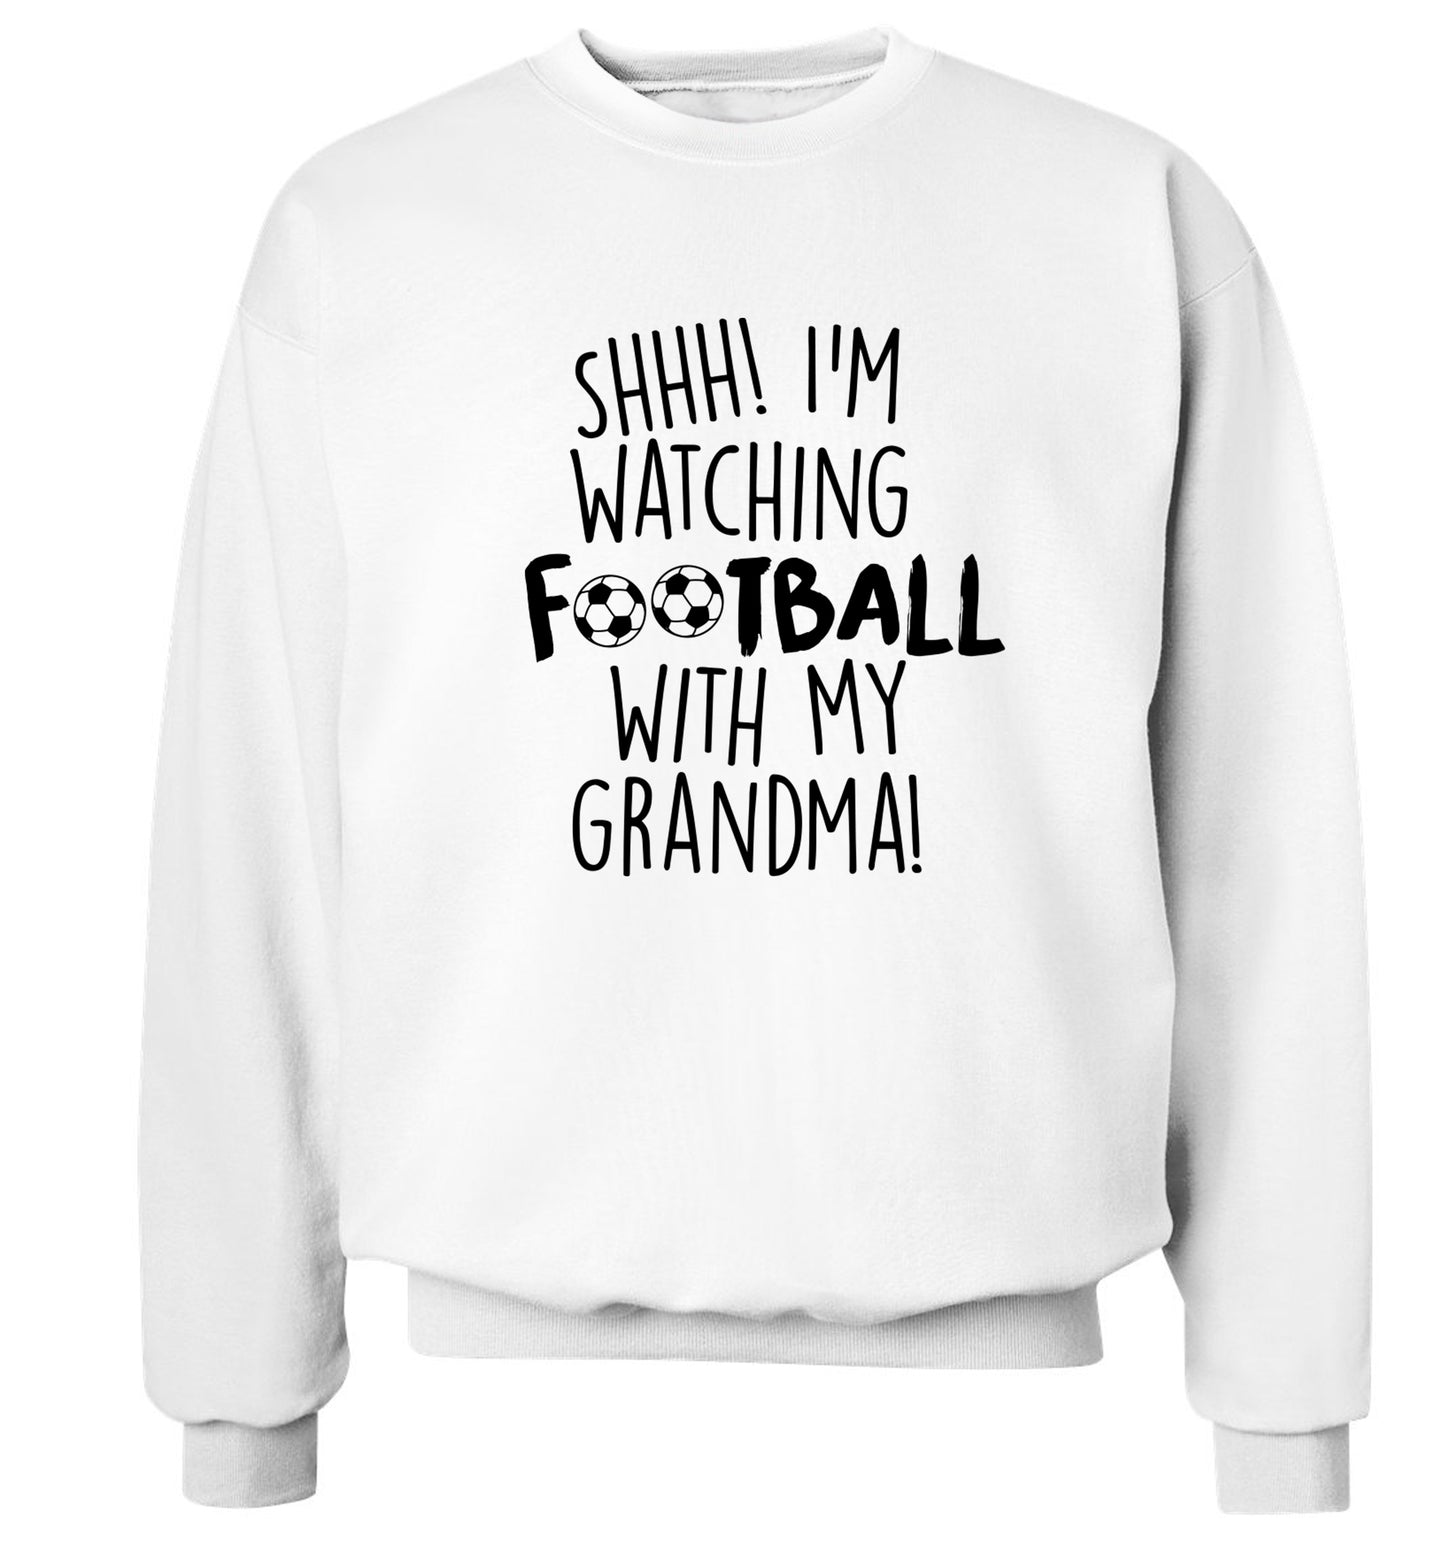 Shhh I'm watching football with my grandma Adult's unisexwhite Sweater 2XL